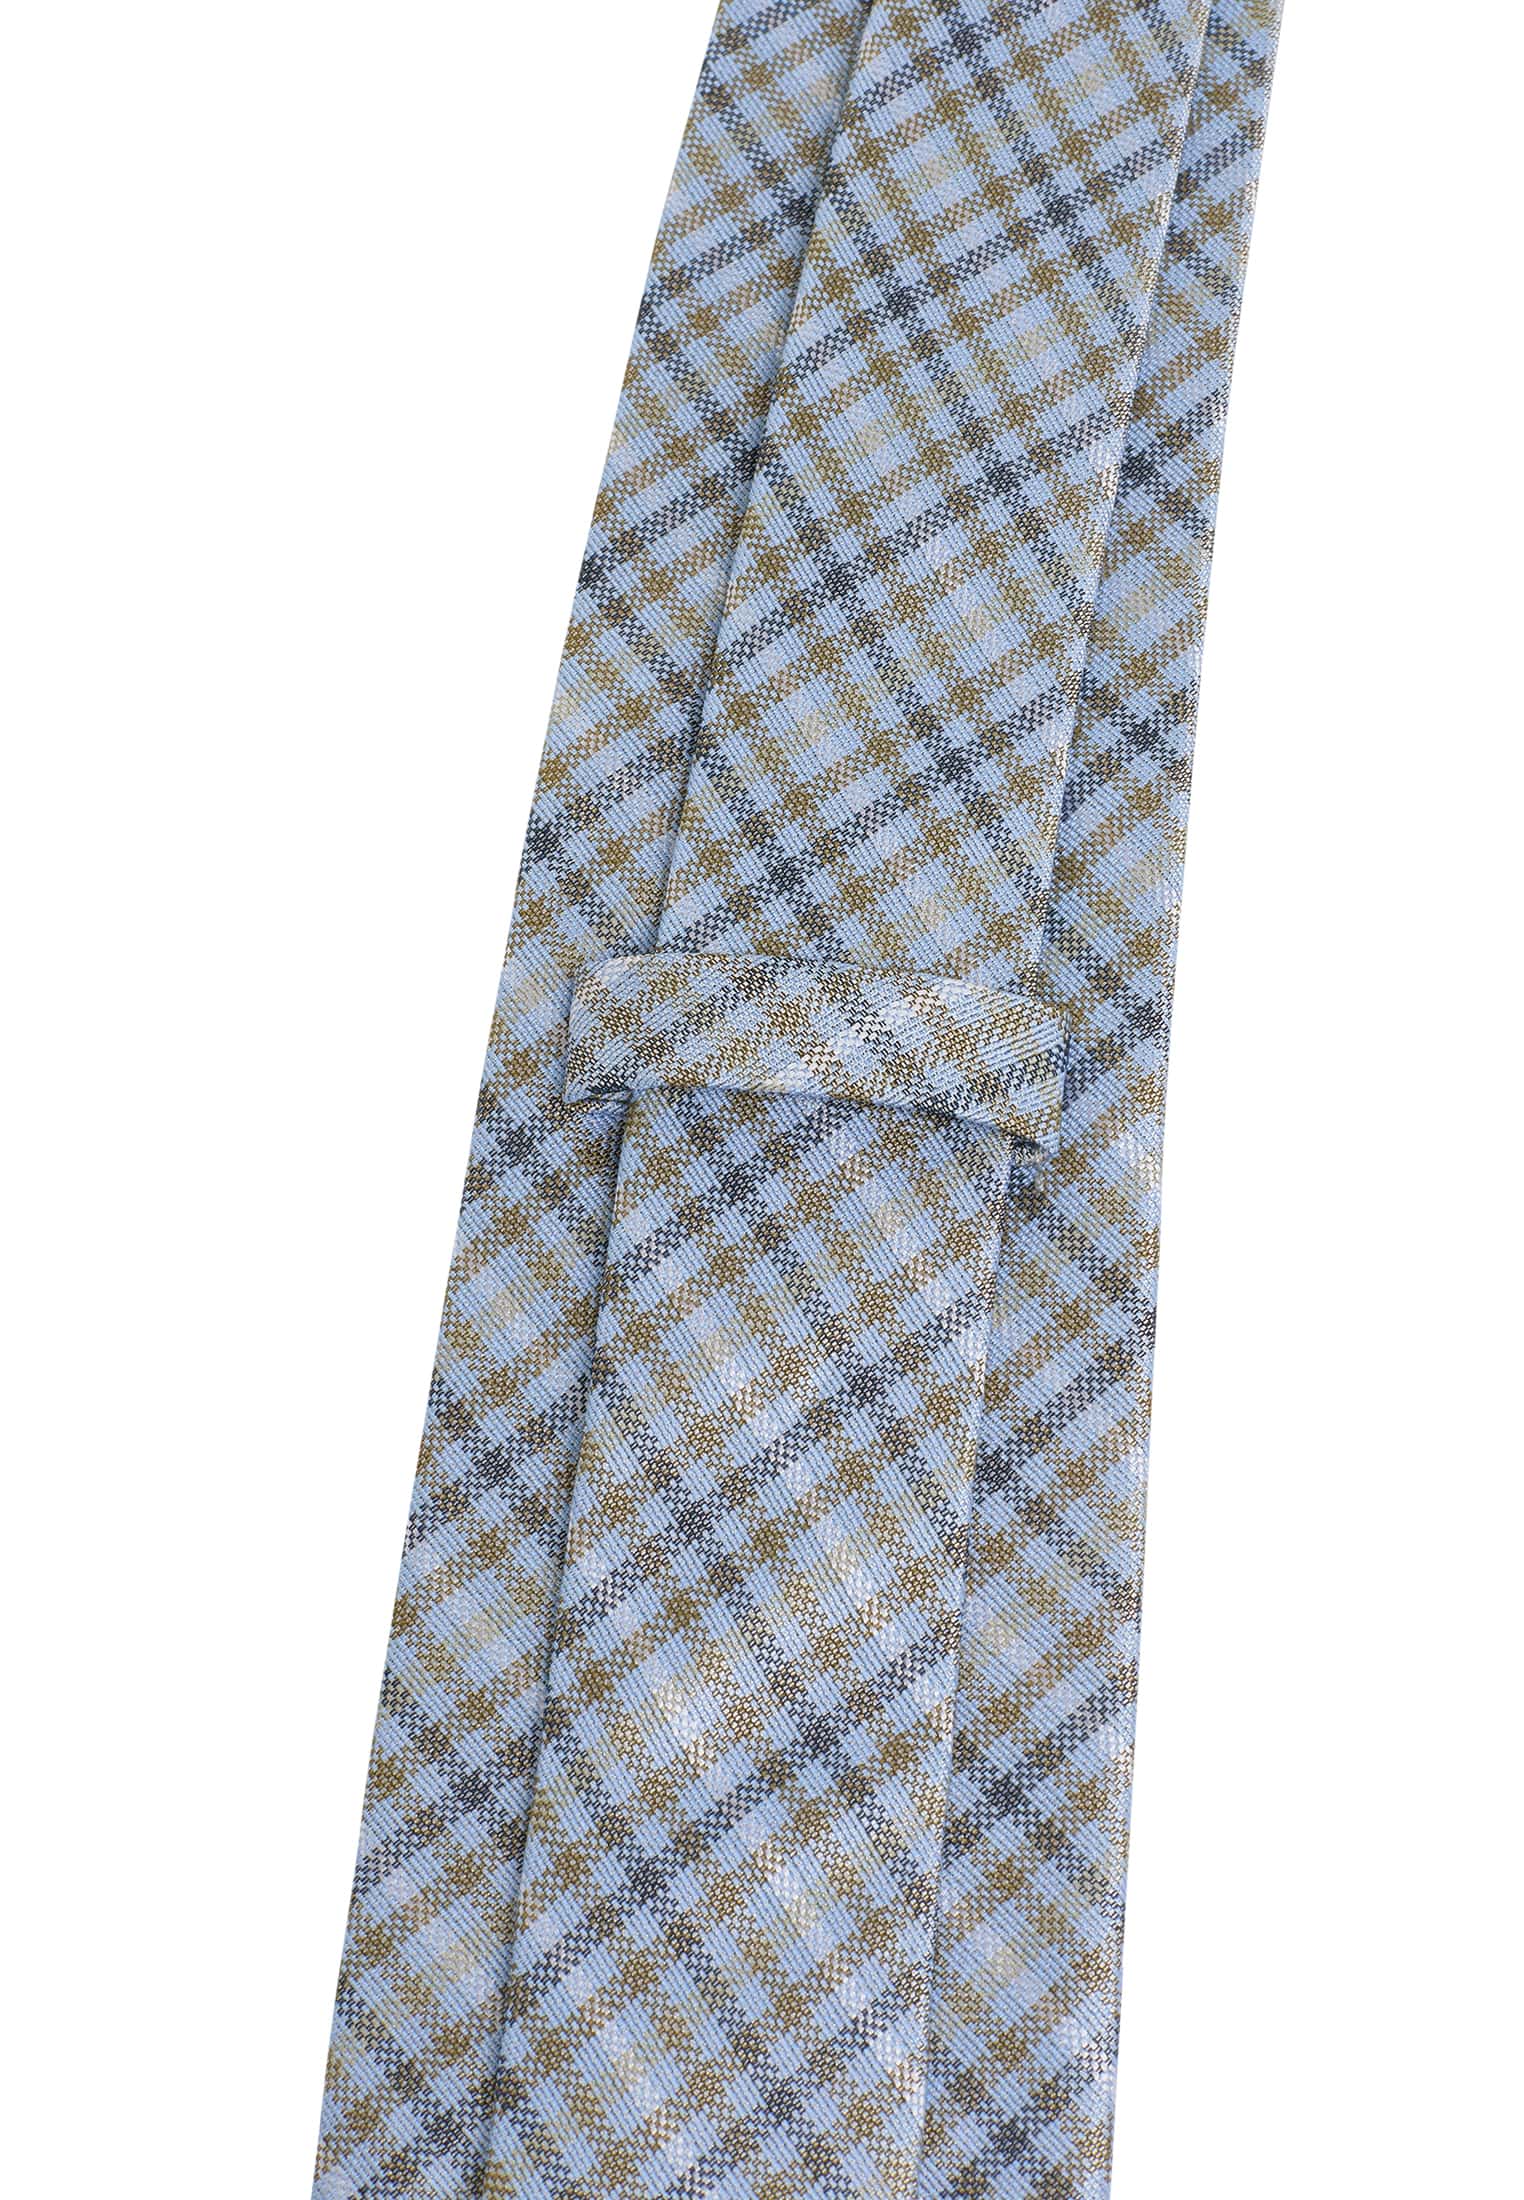 Cravate bleu/vert à carreaux